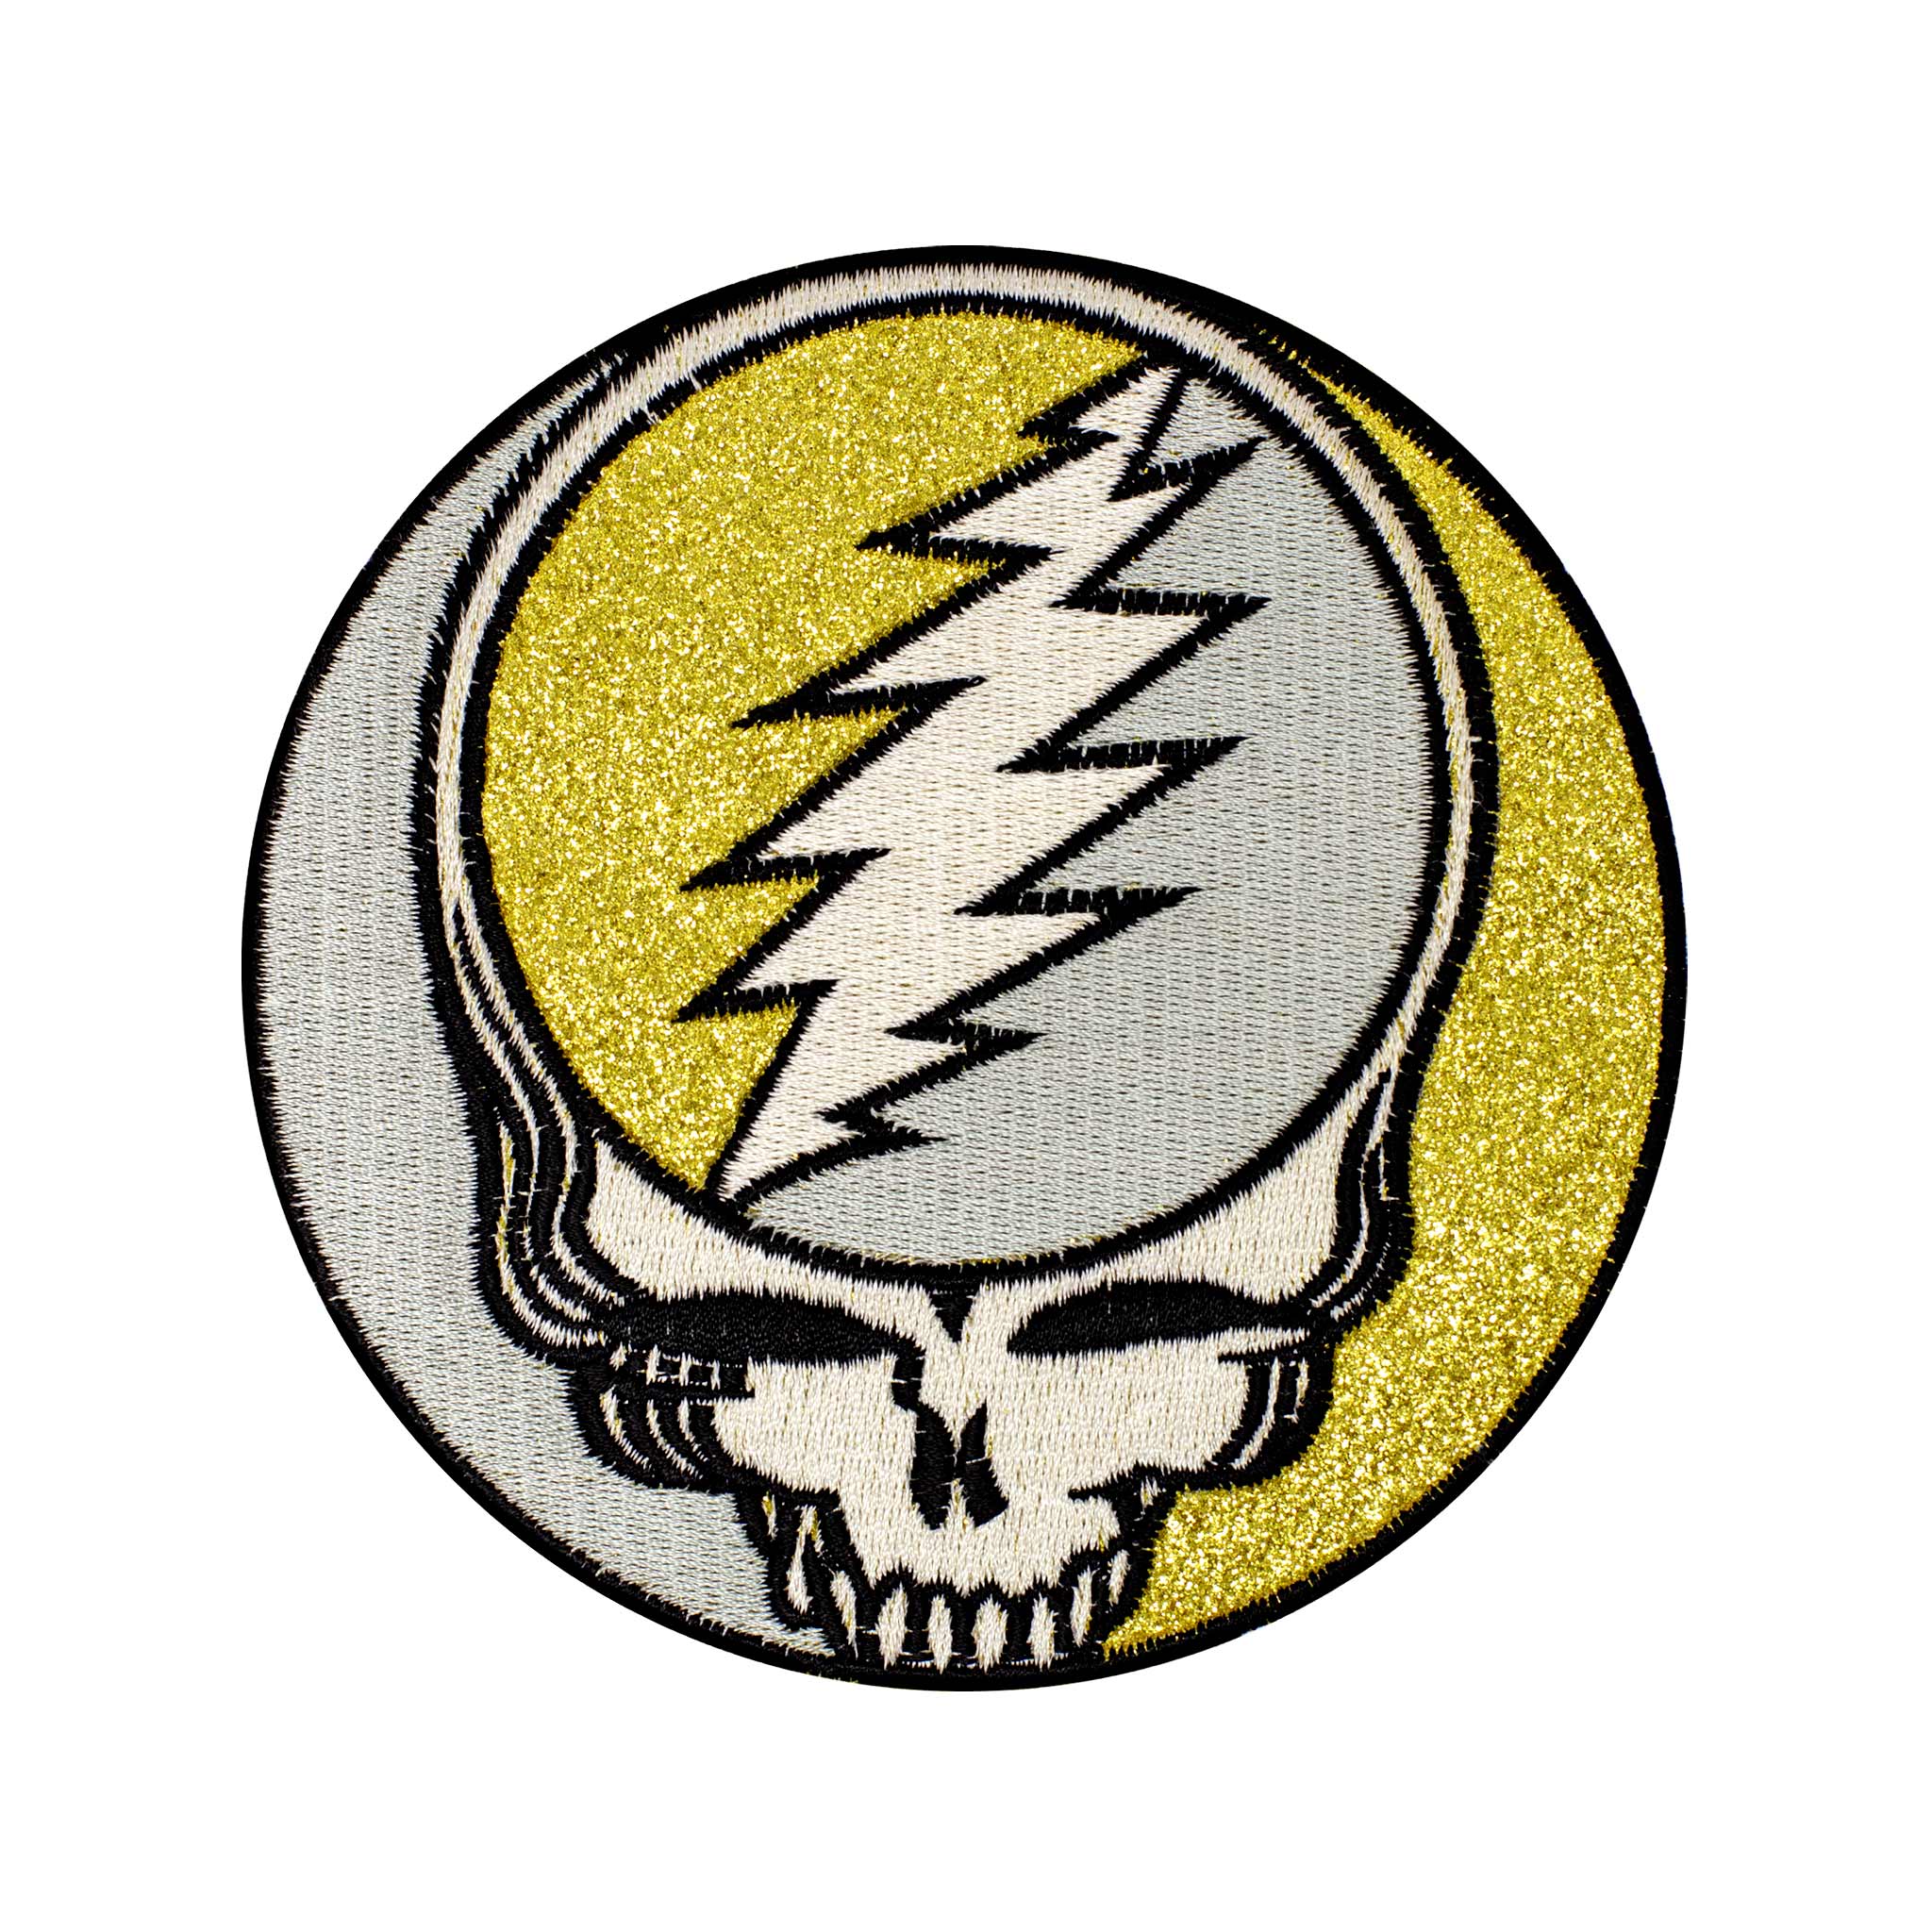 Grateful Dead Stealie Logo - HippieShop.com: Grateful Dead Golden Stealie Patch on Sale for $6.99